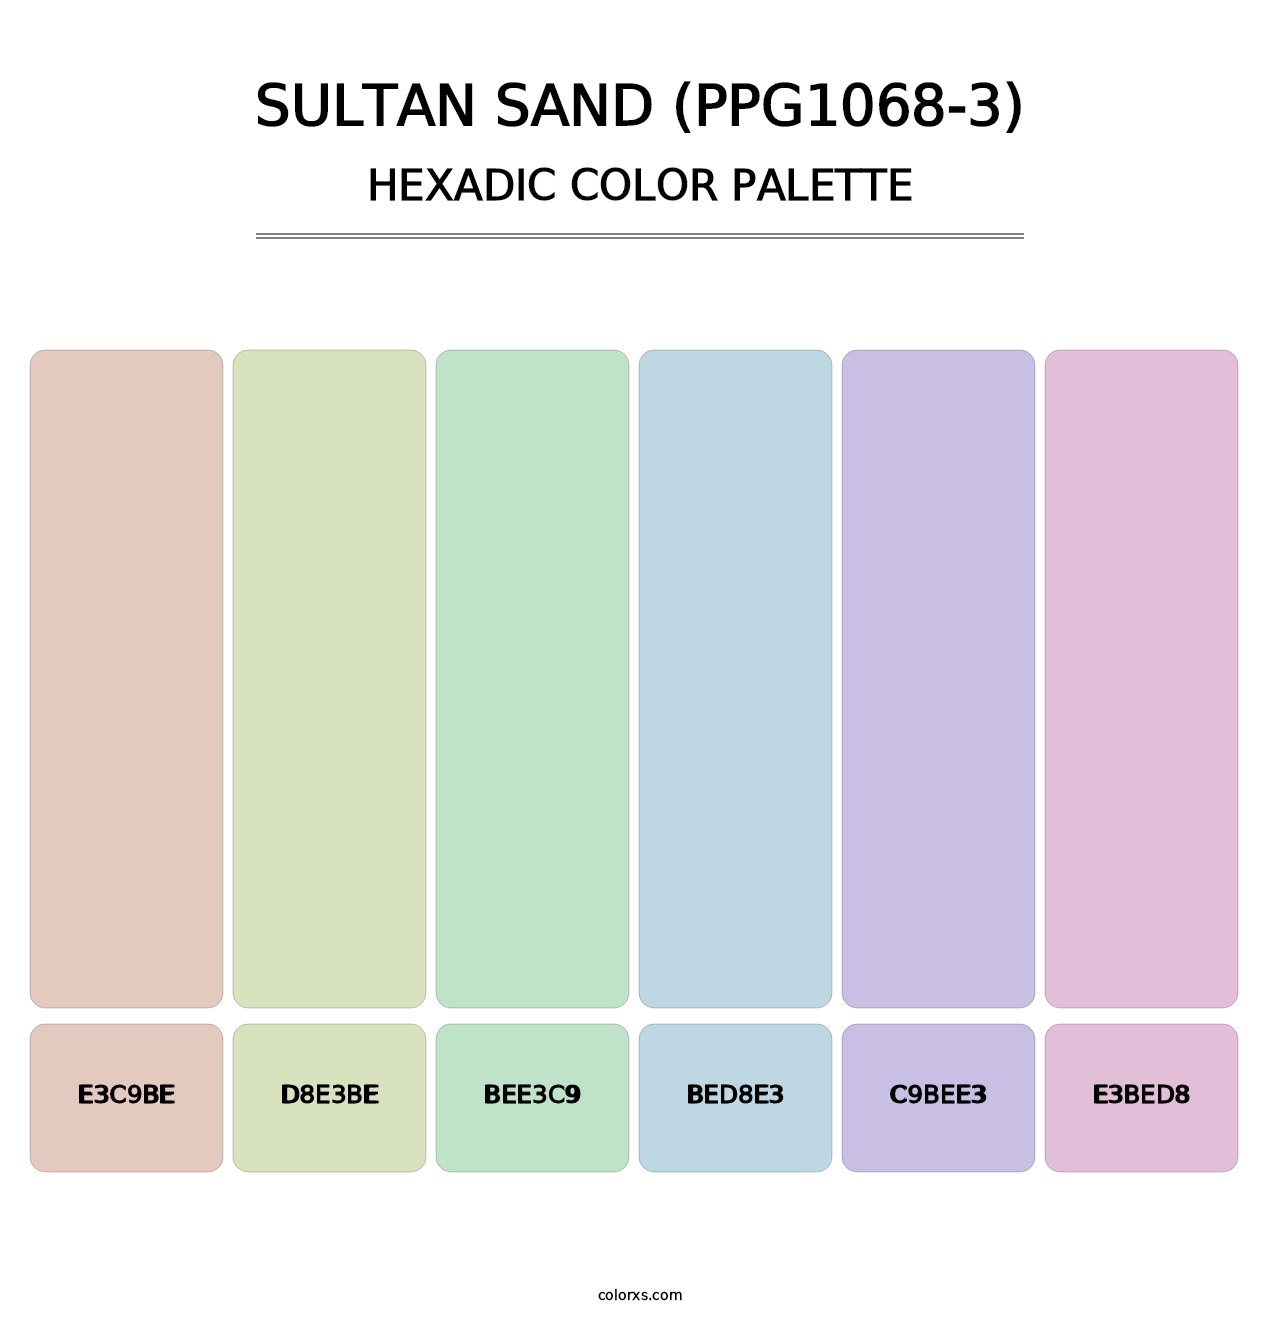 Sultan Sand (PPG1068-3) - Hexadic Color Palette